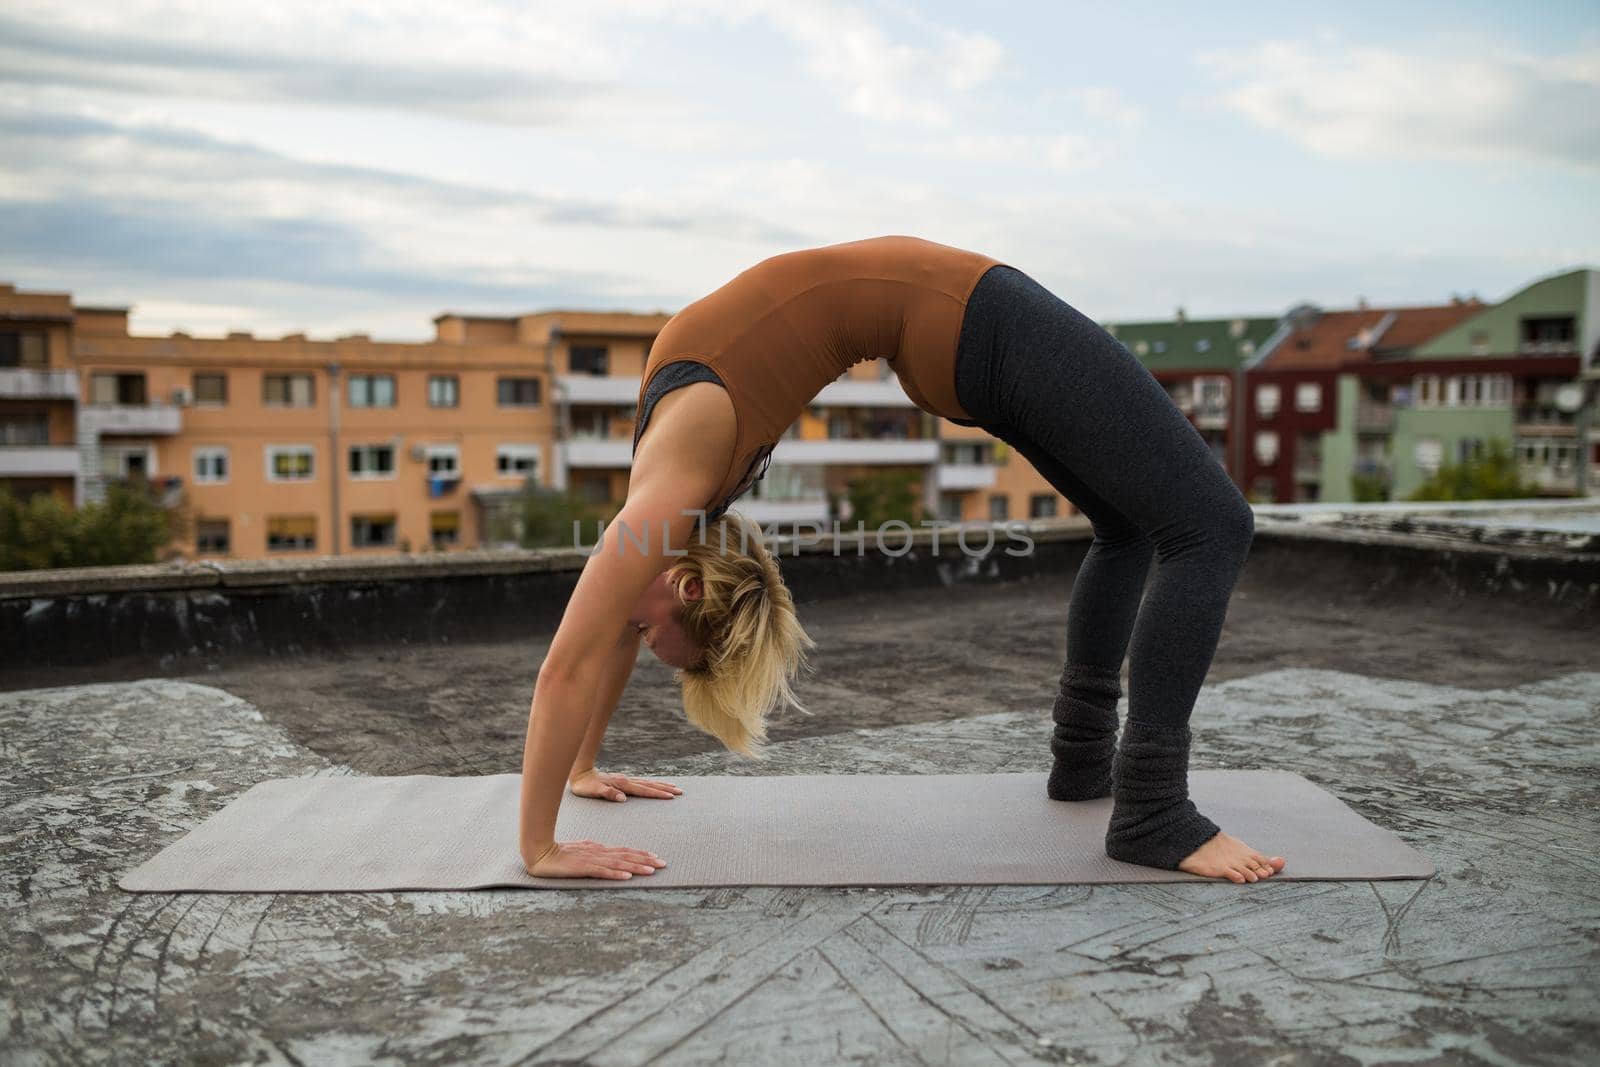 Woman enjoys practicing yoga on the roof,Urdhva Dhanurasana/Upward bow pose.